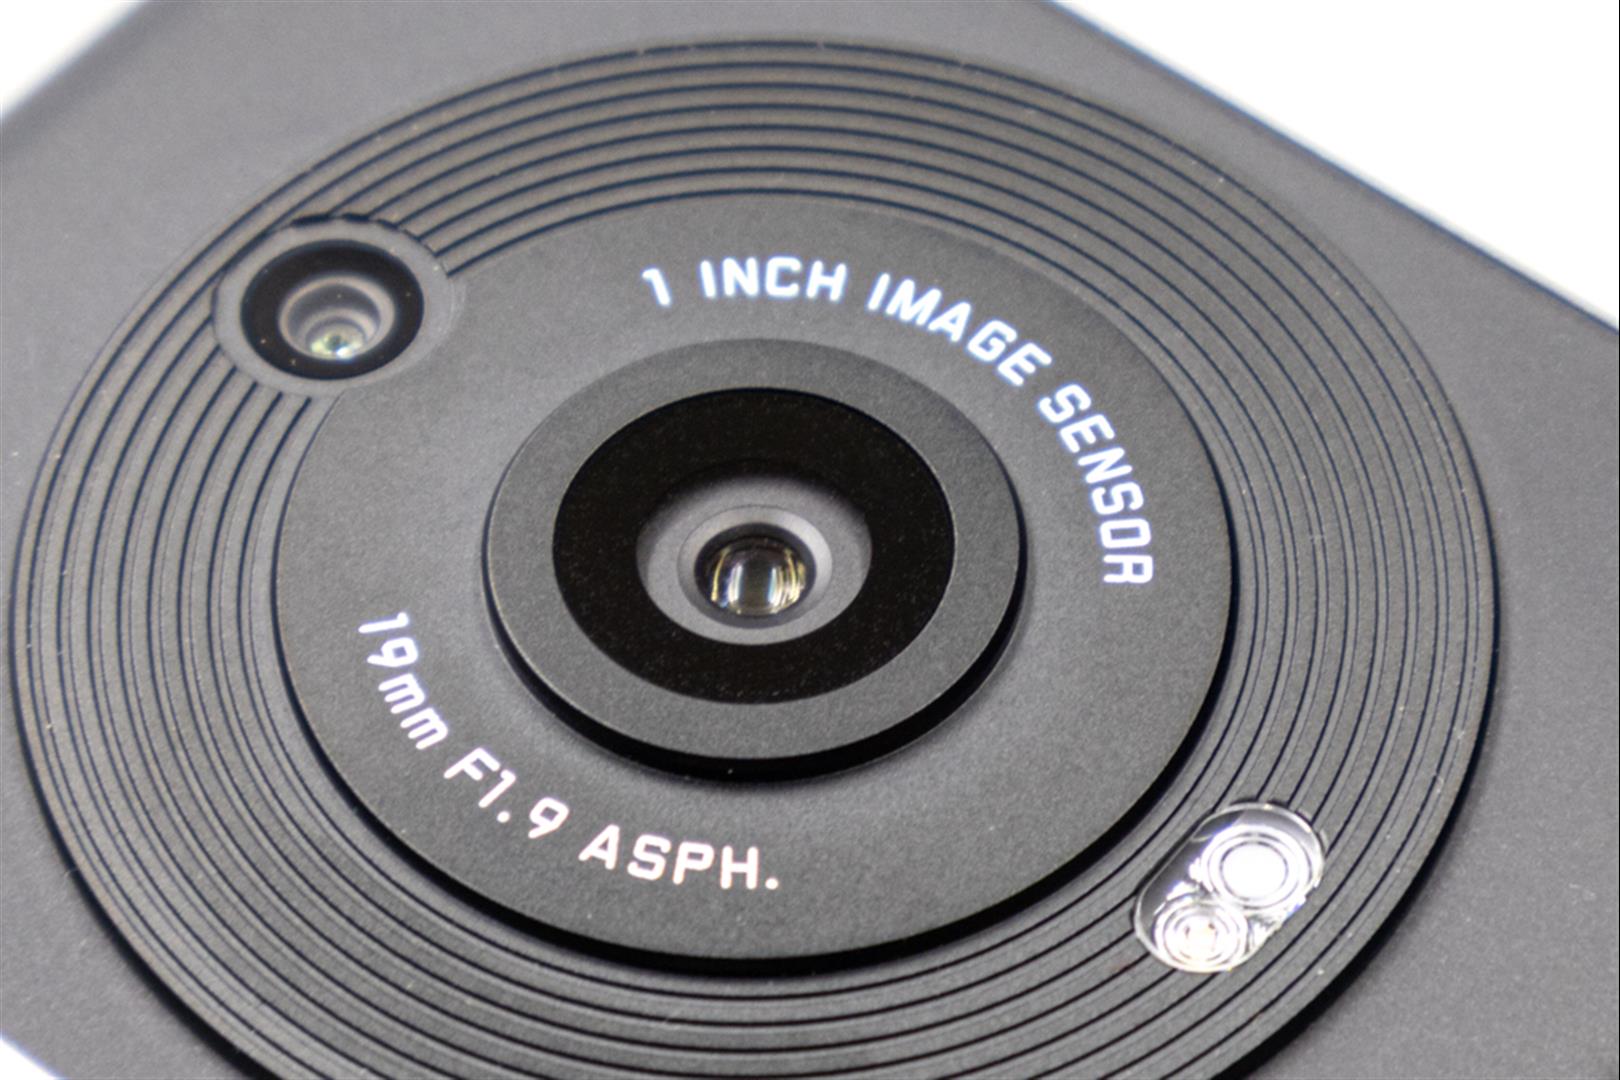 SHARP AQUOS R8s pro，一英吋感光元件，旗艦規格，既是手機也是相機